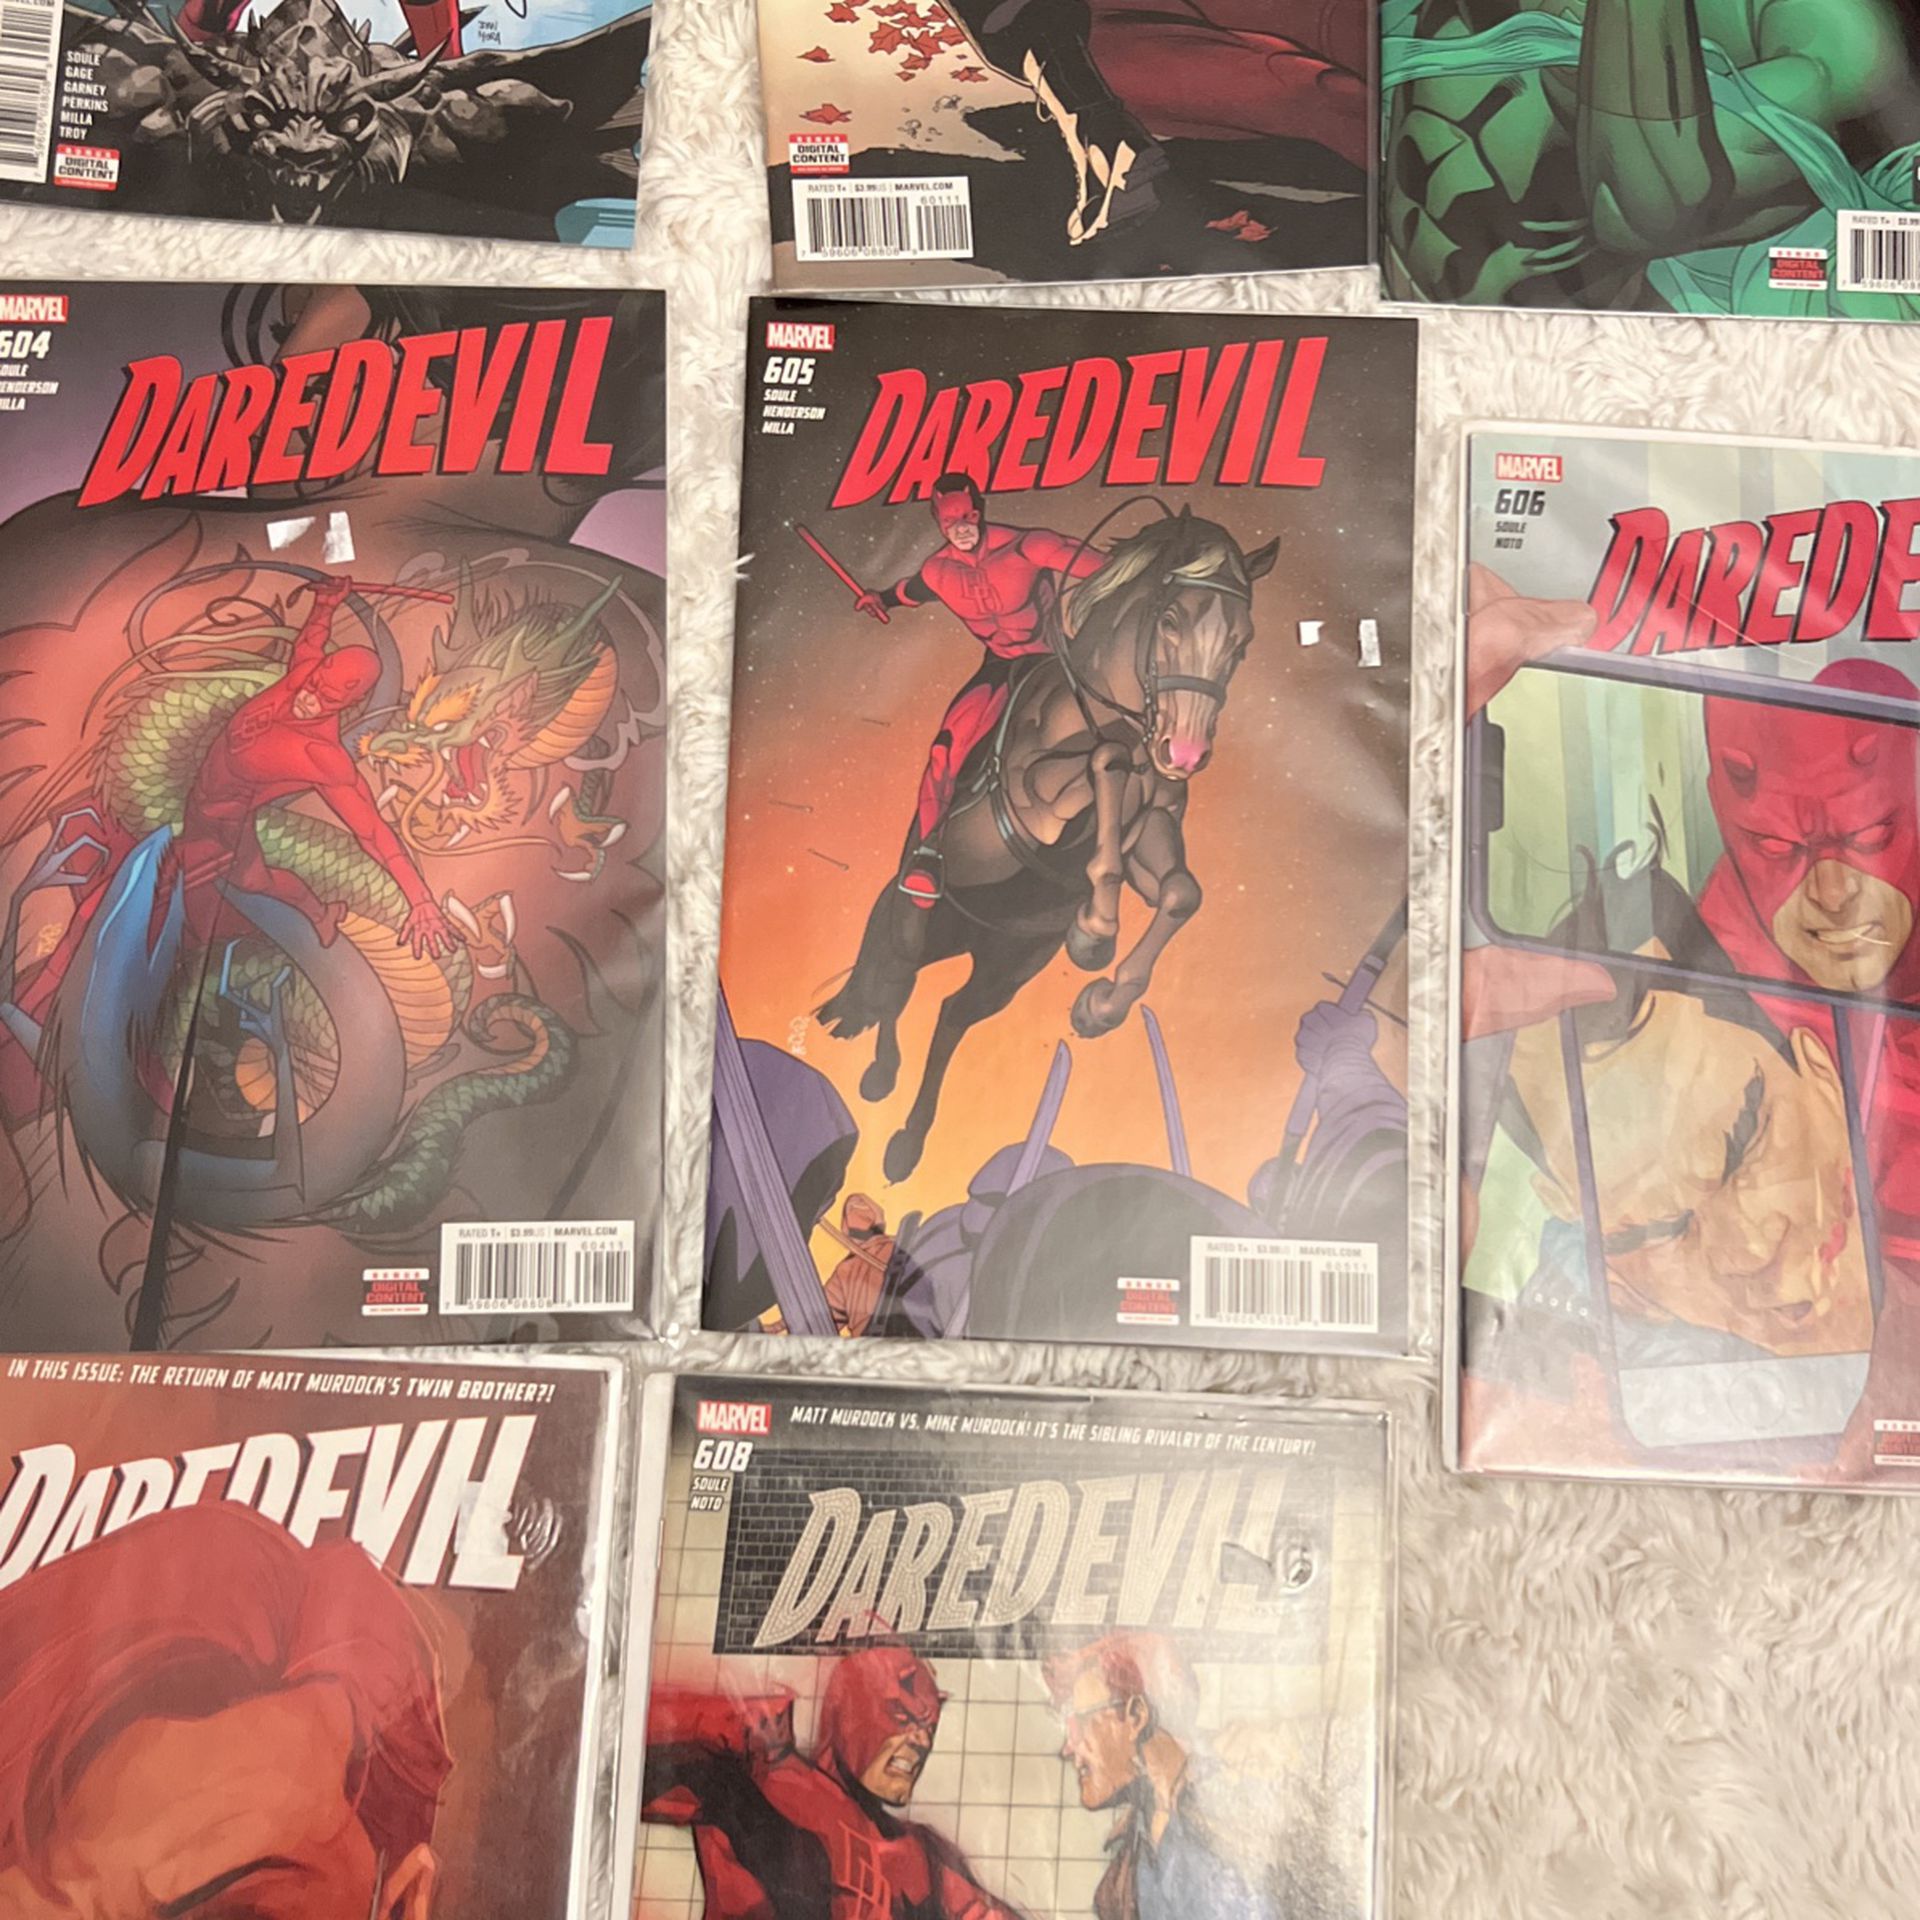 600-608 Daredevil comics